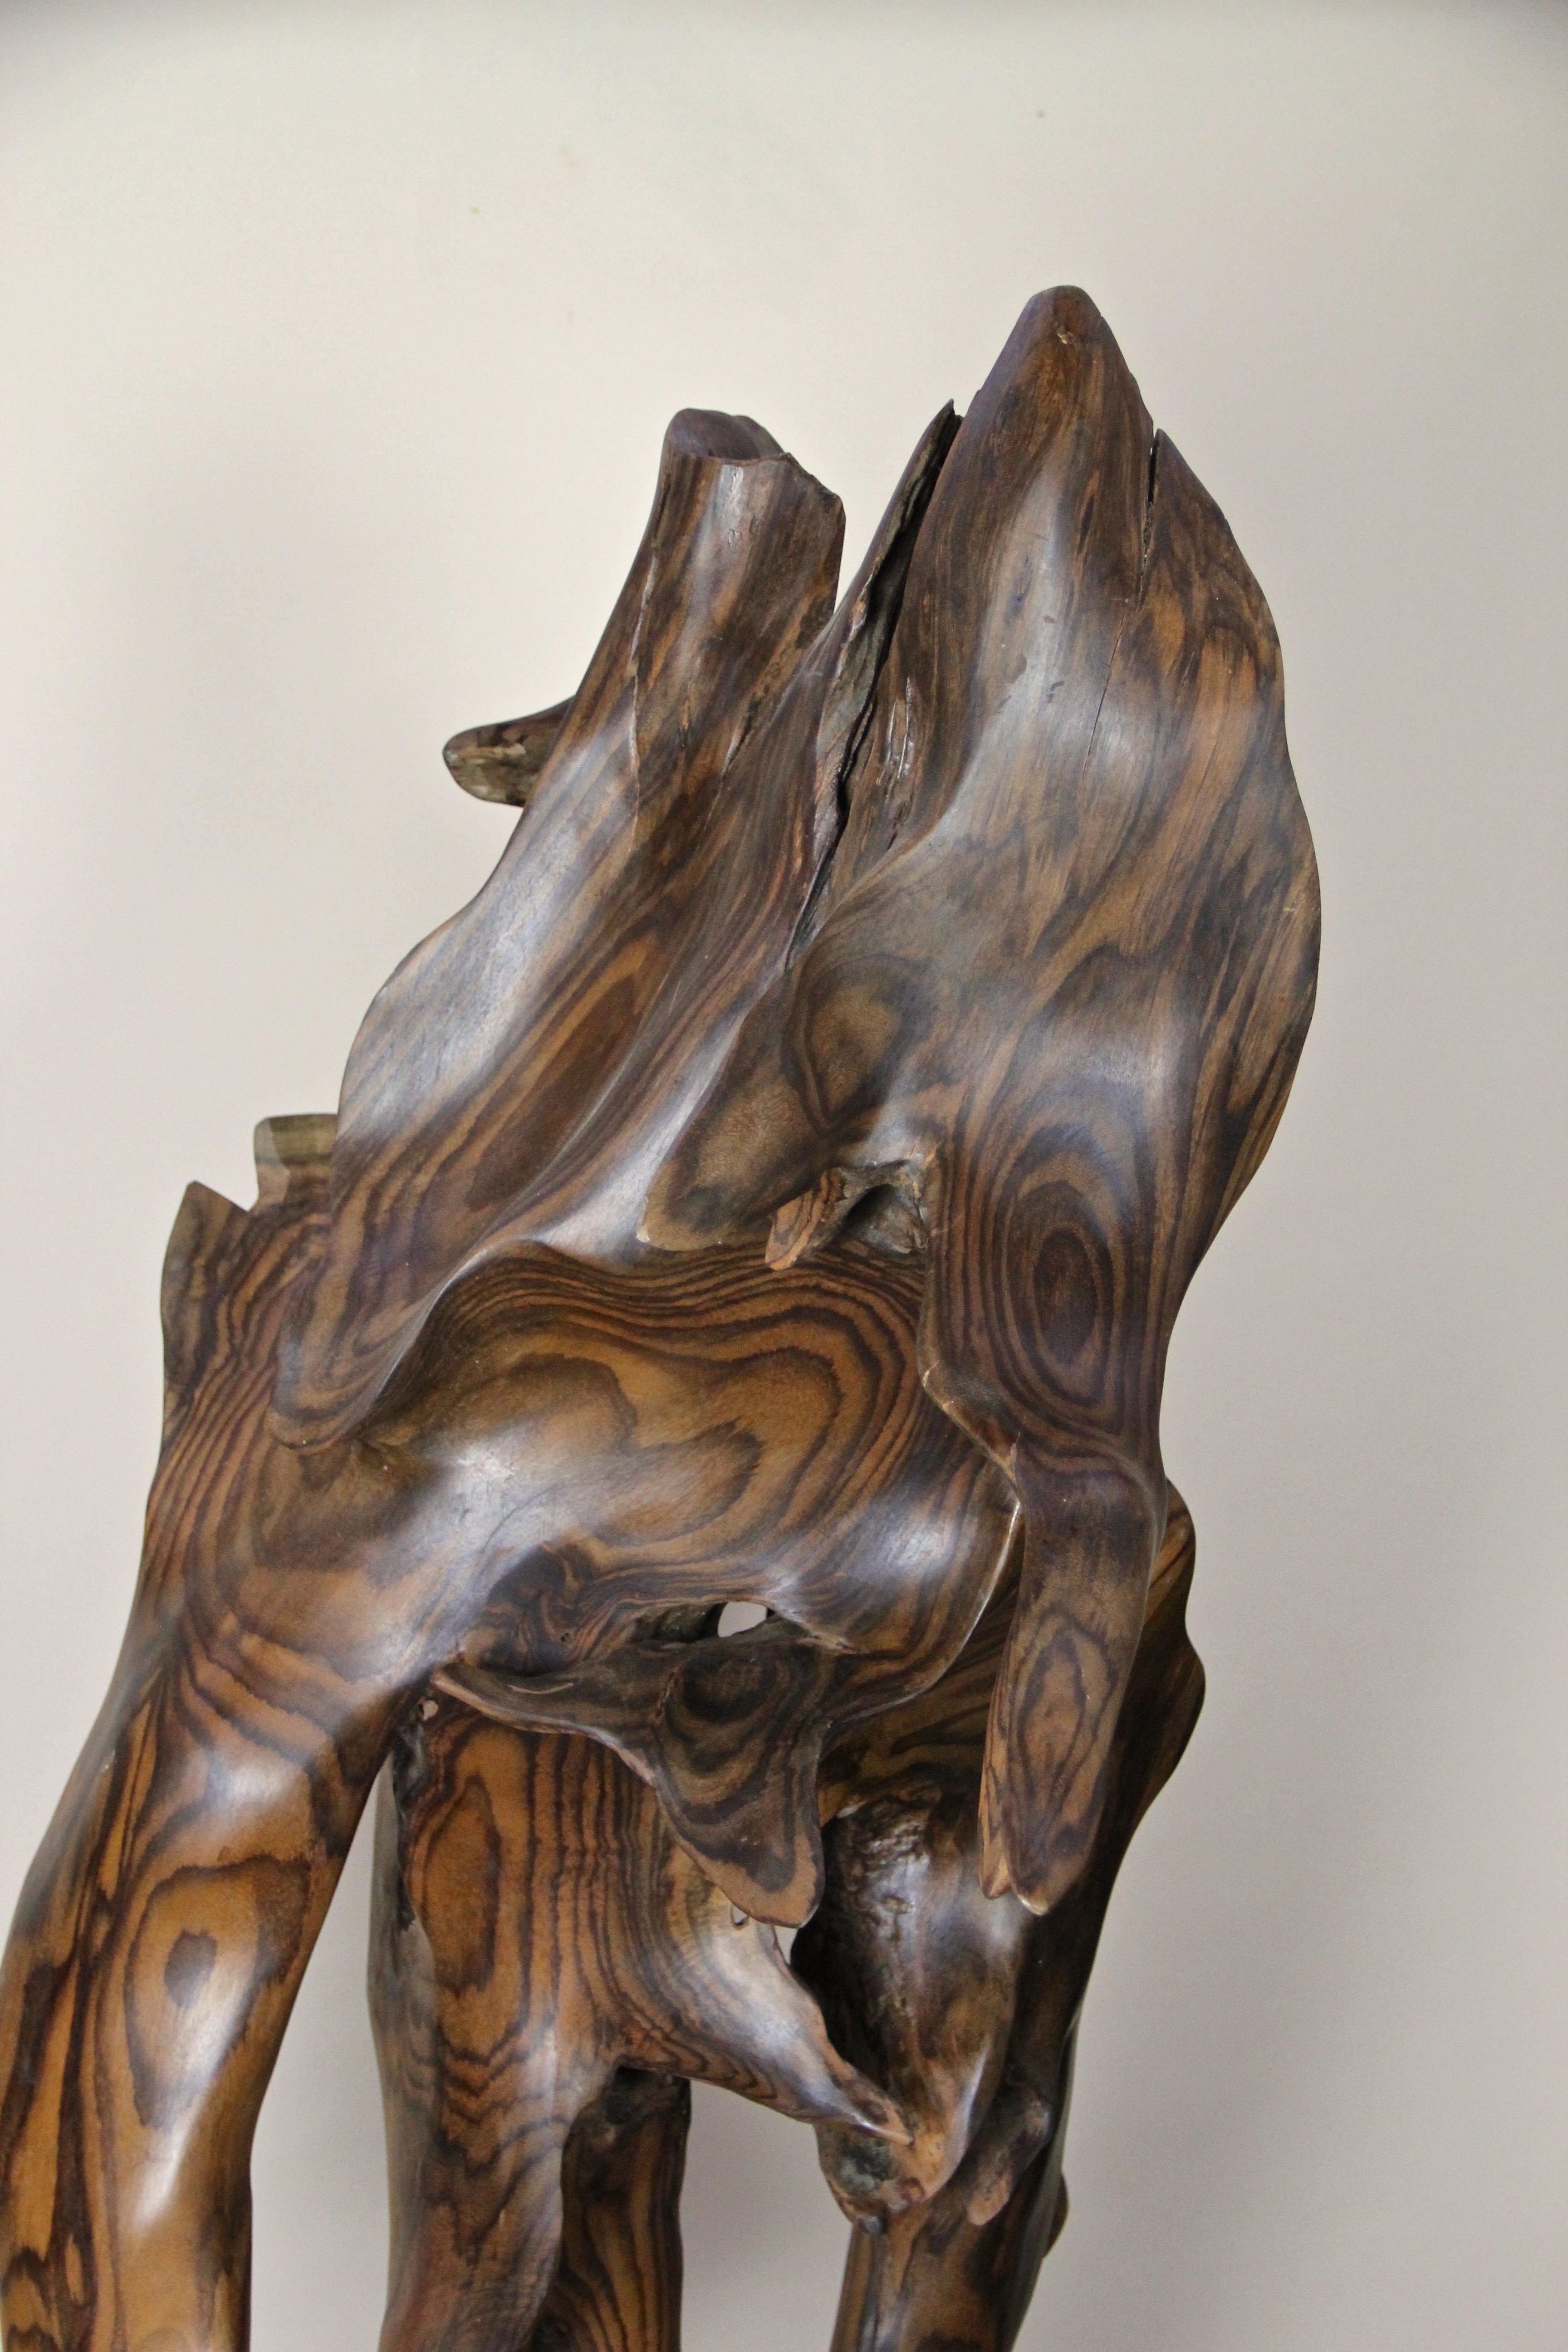 Organic Modern Abstract Organic Sonokeling Wood Root Sculpture on Mat Black Metal Stand